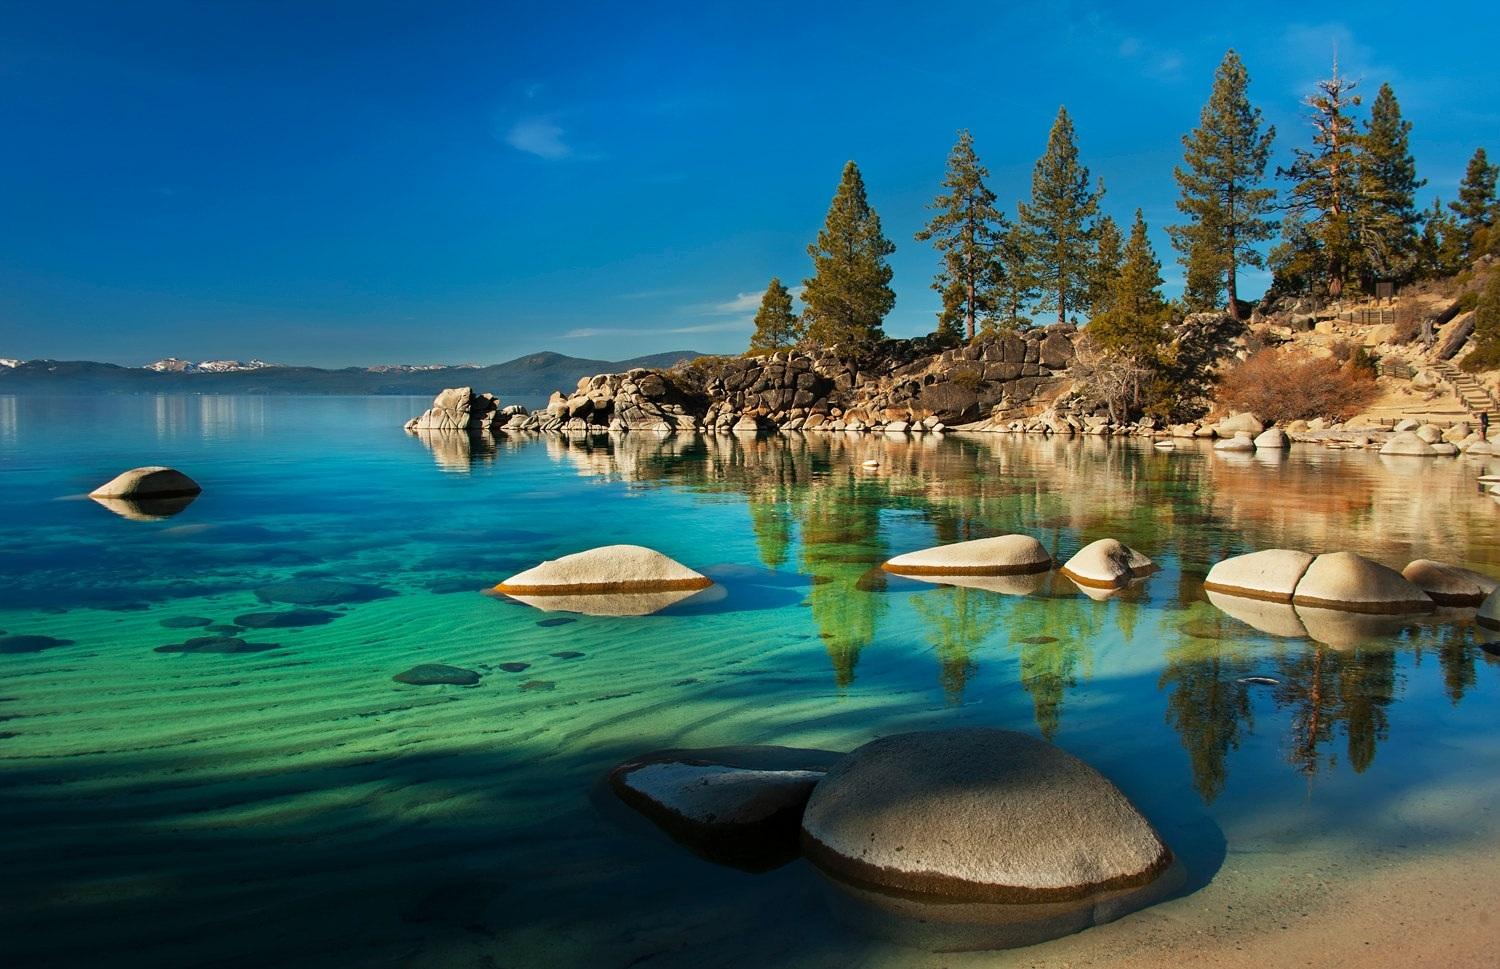 Lake Tahoe Summer Mountains Fondos De Pantalla Im Genes Por